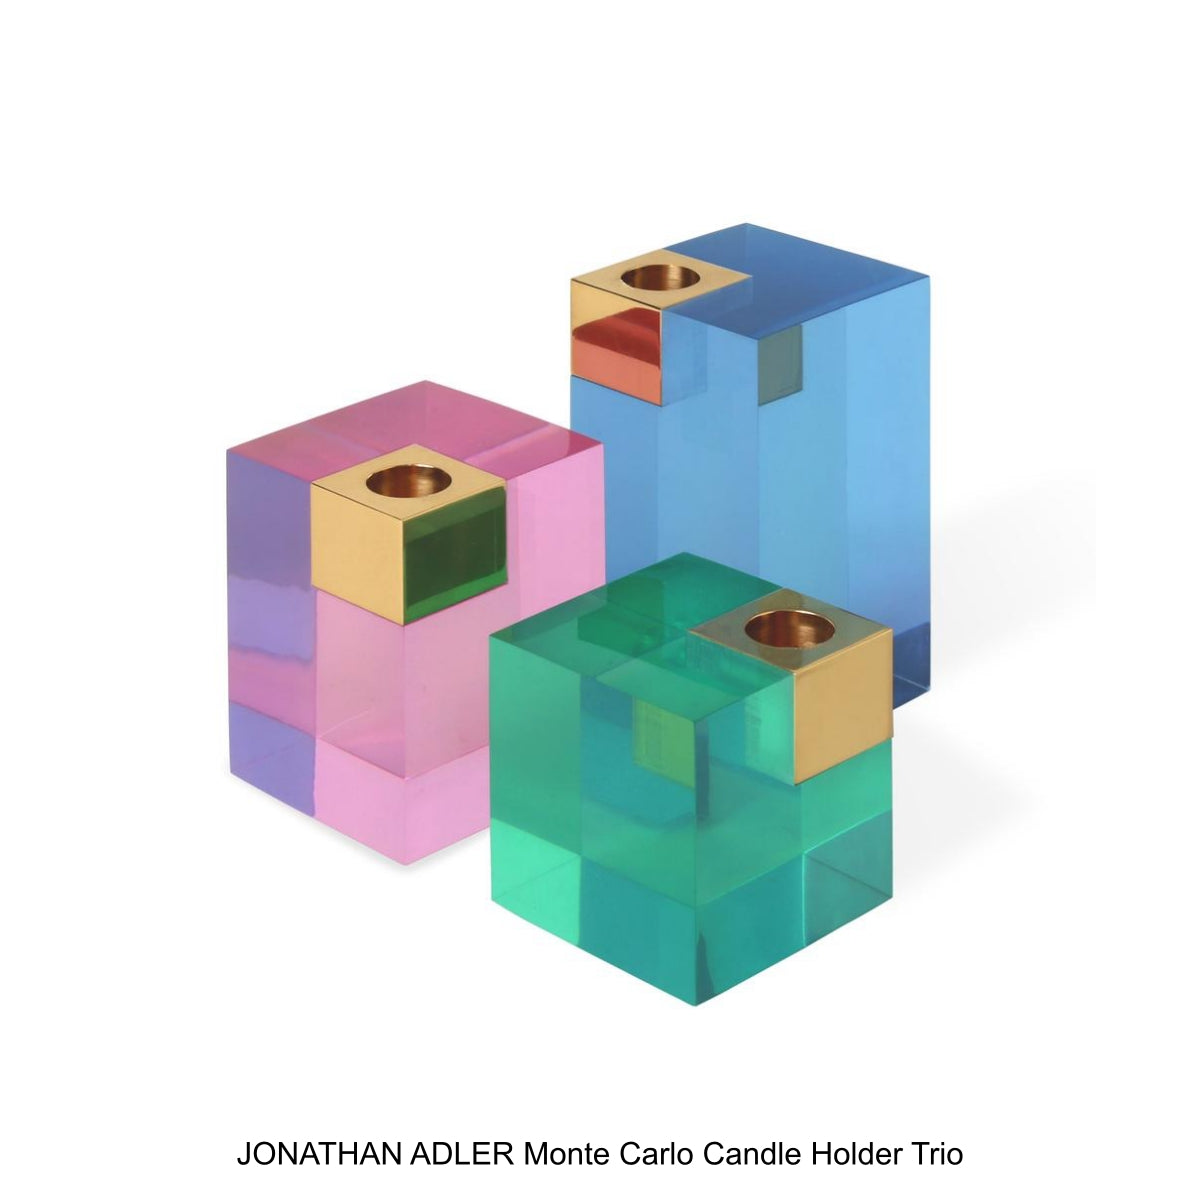 JONATHAN ADLER Monte Carlo Candle Holder Trio